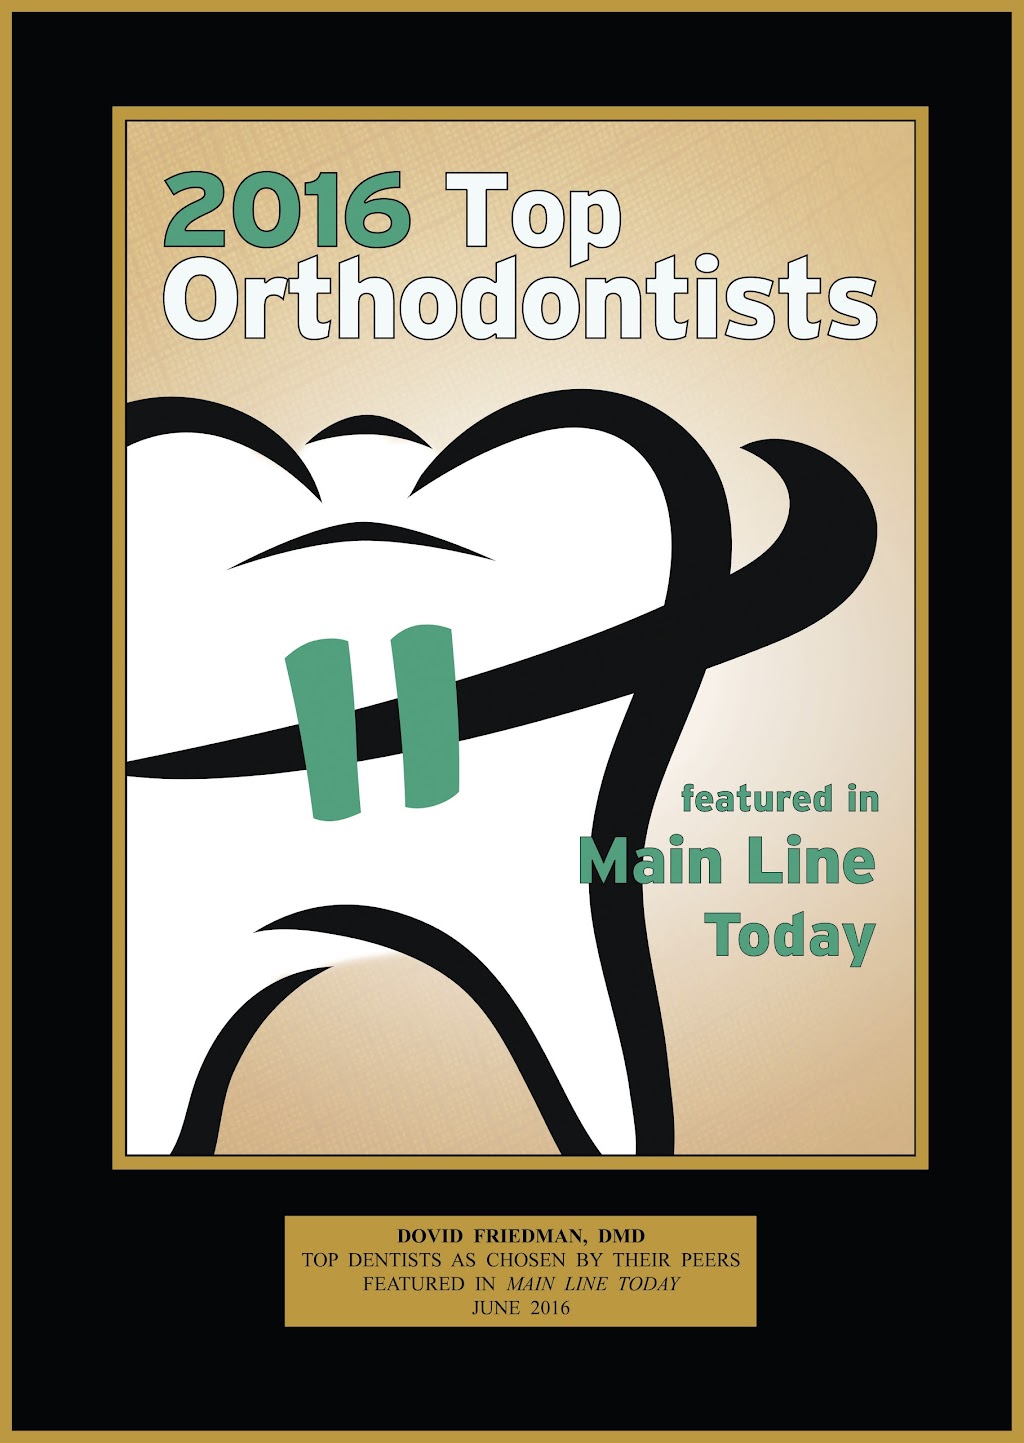 Friedman Orthodontics | 141 Montgomery Ave, Bala Cynwyd, PA 19004 | Phone: (610) 667-1984